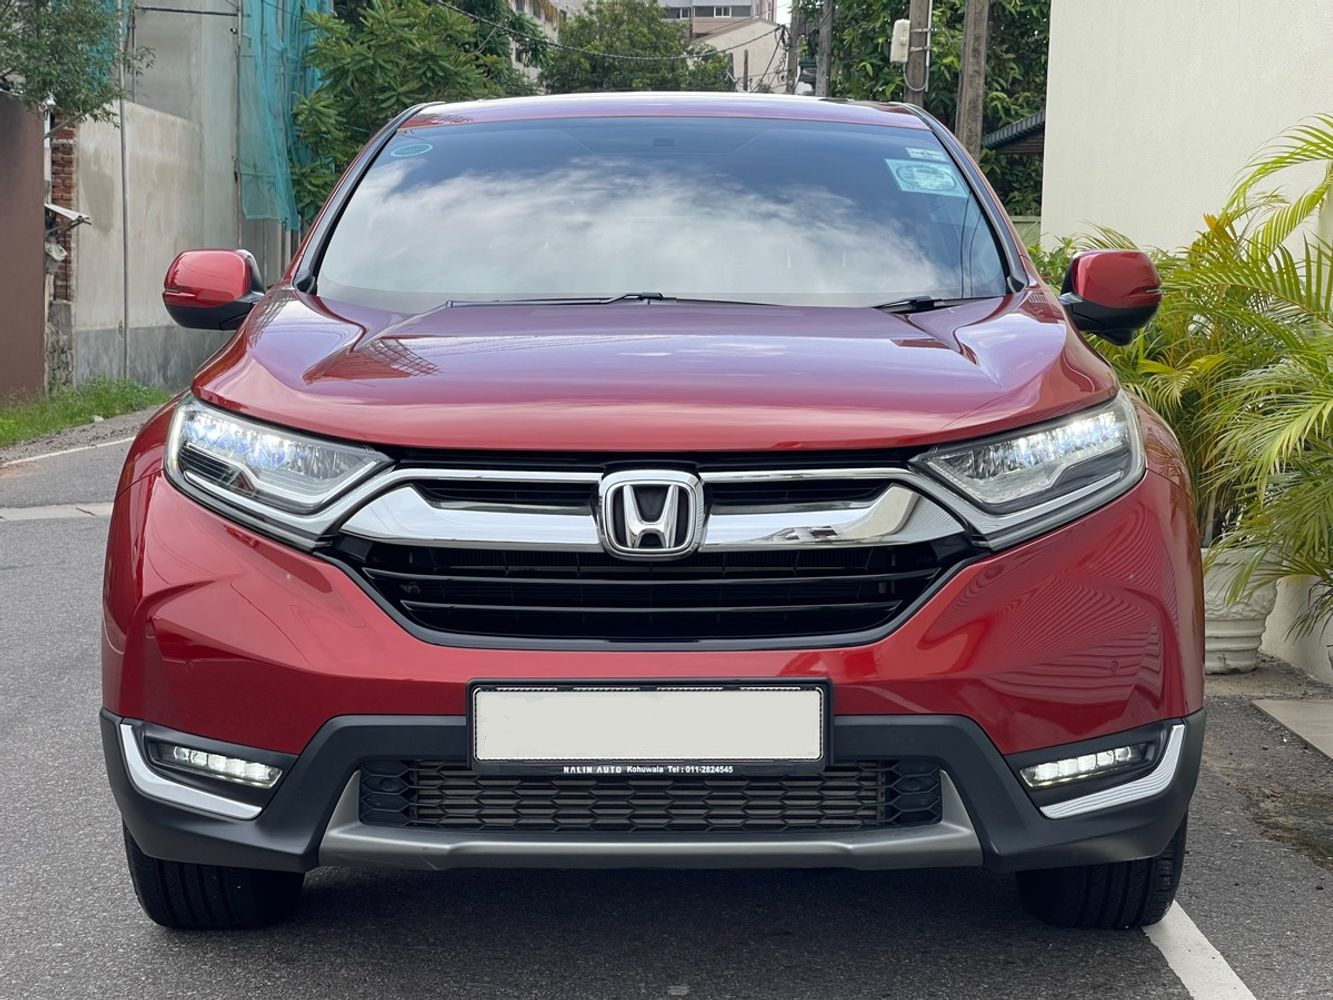 Honda CRV front view